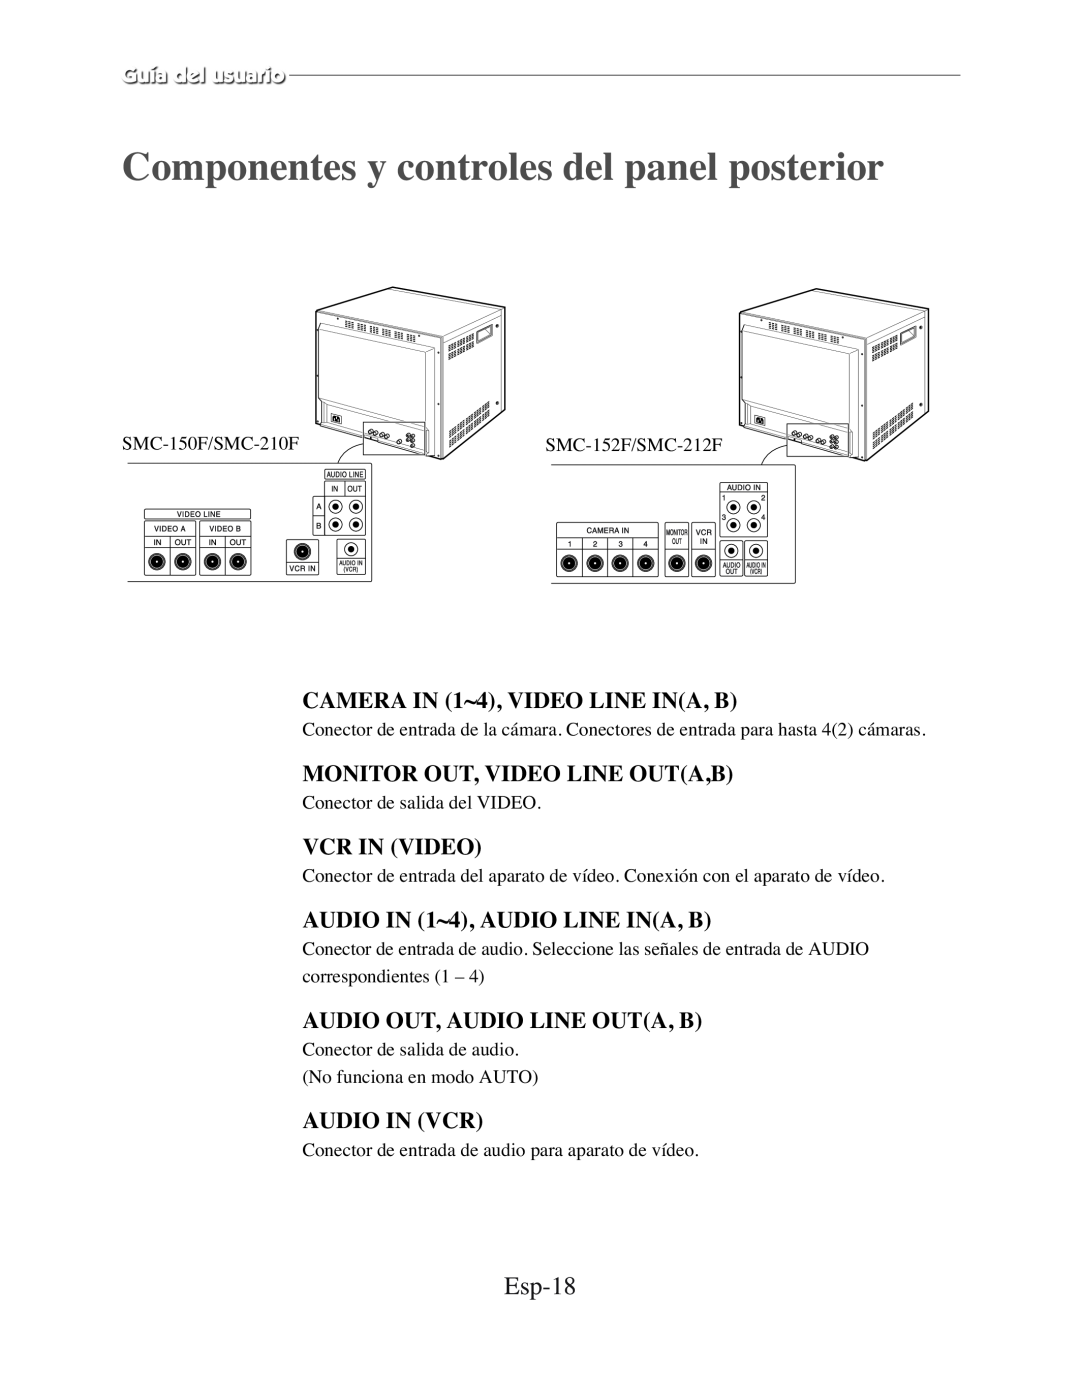 Samsung SMC-210FP Componentes y controles del panel posterior, Esp-18, CAMERA IN 1~4, VIDEO LINE INA, B, Vcr In Video 